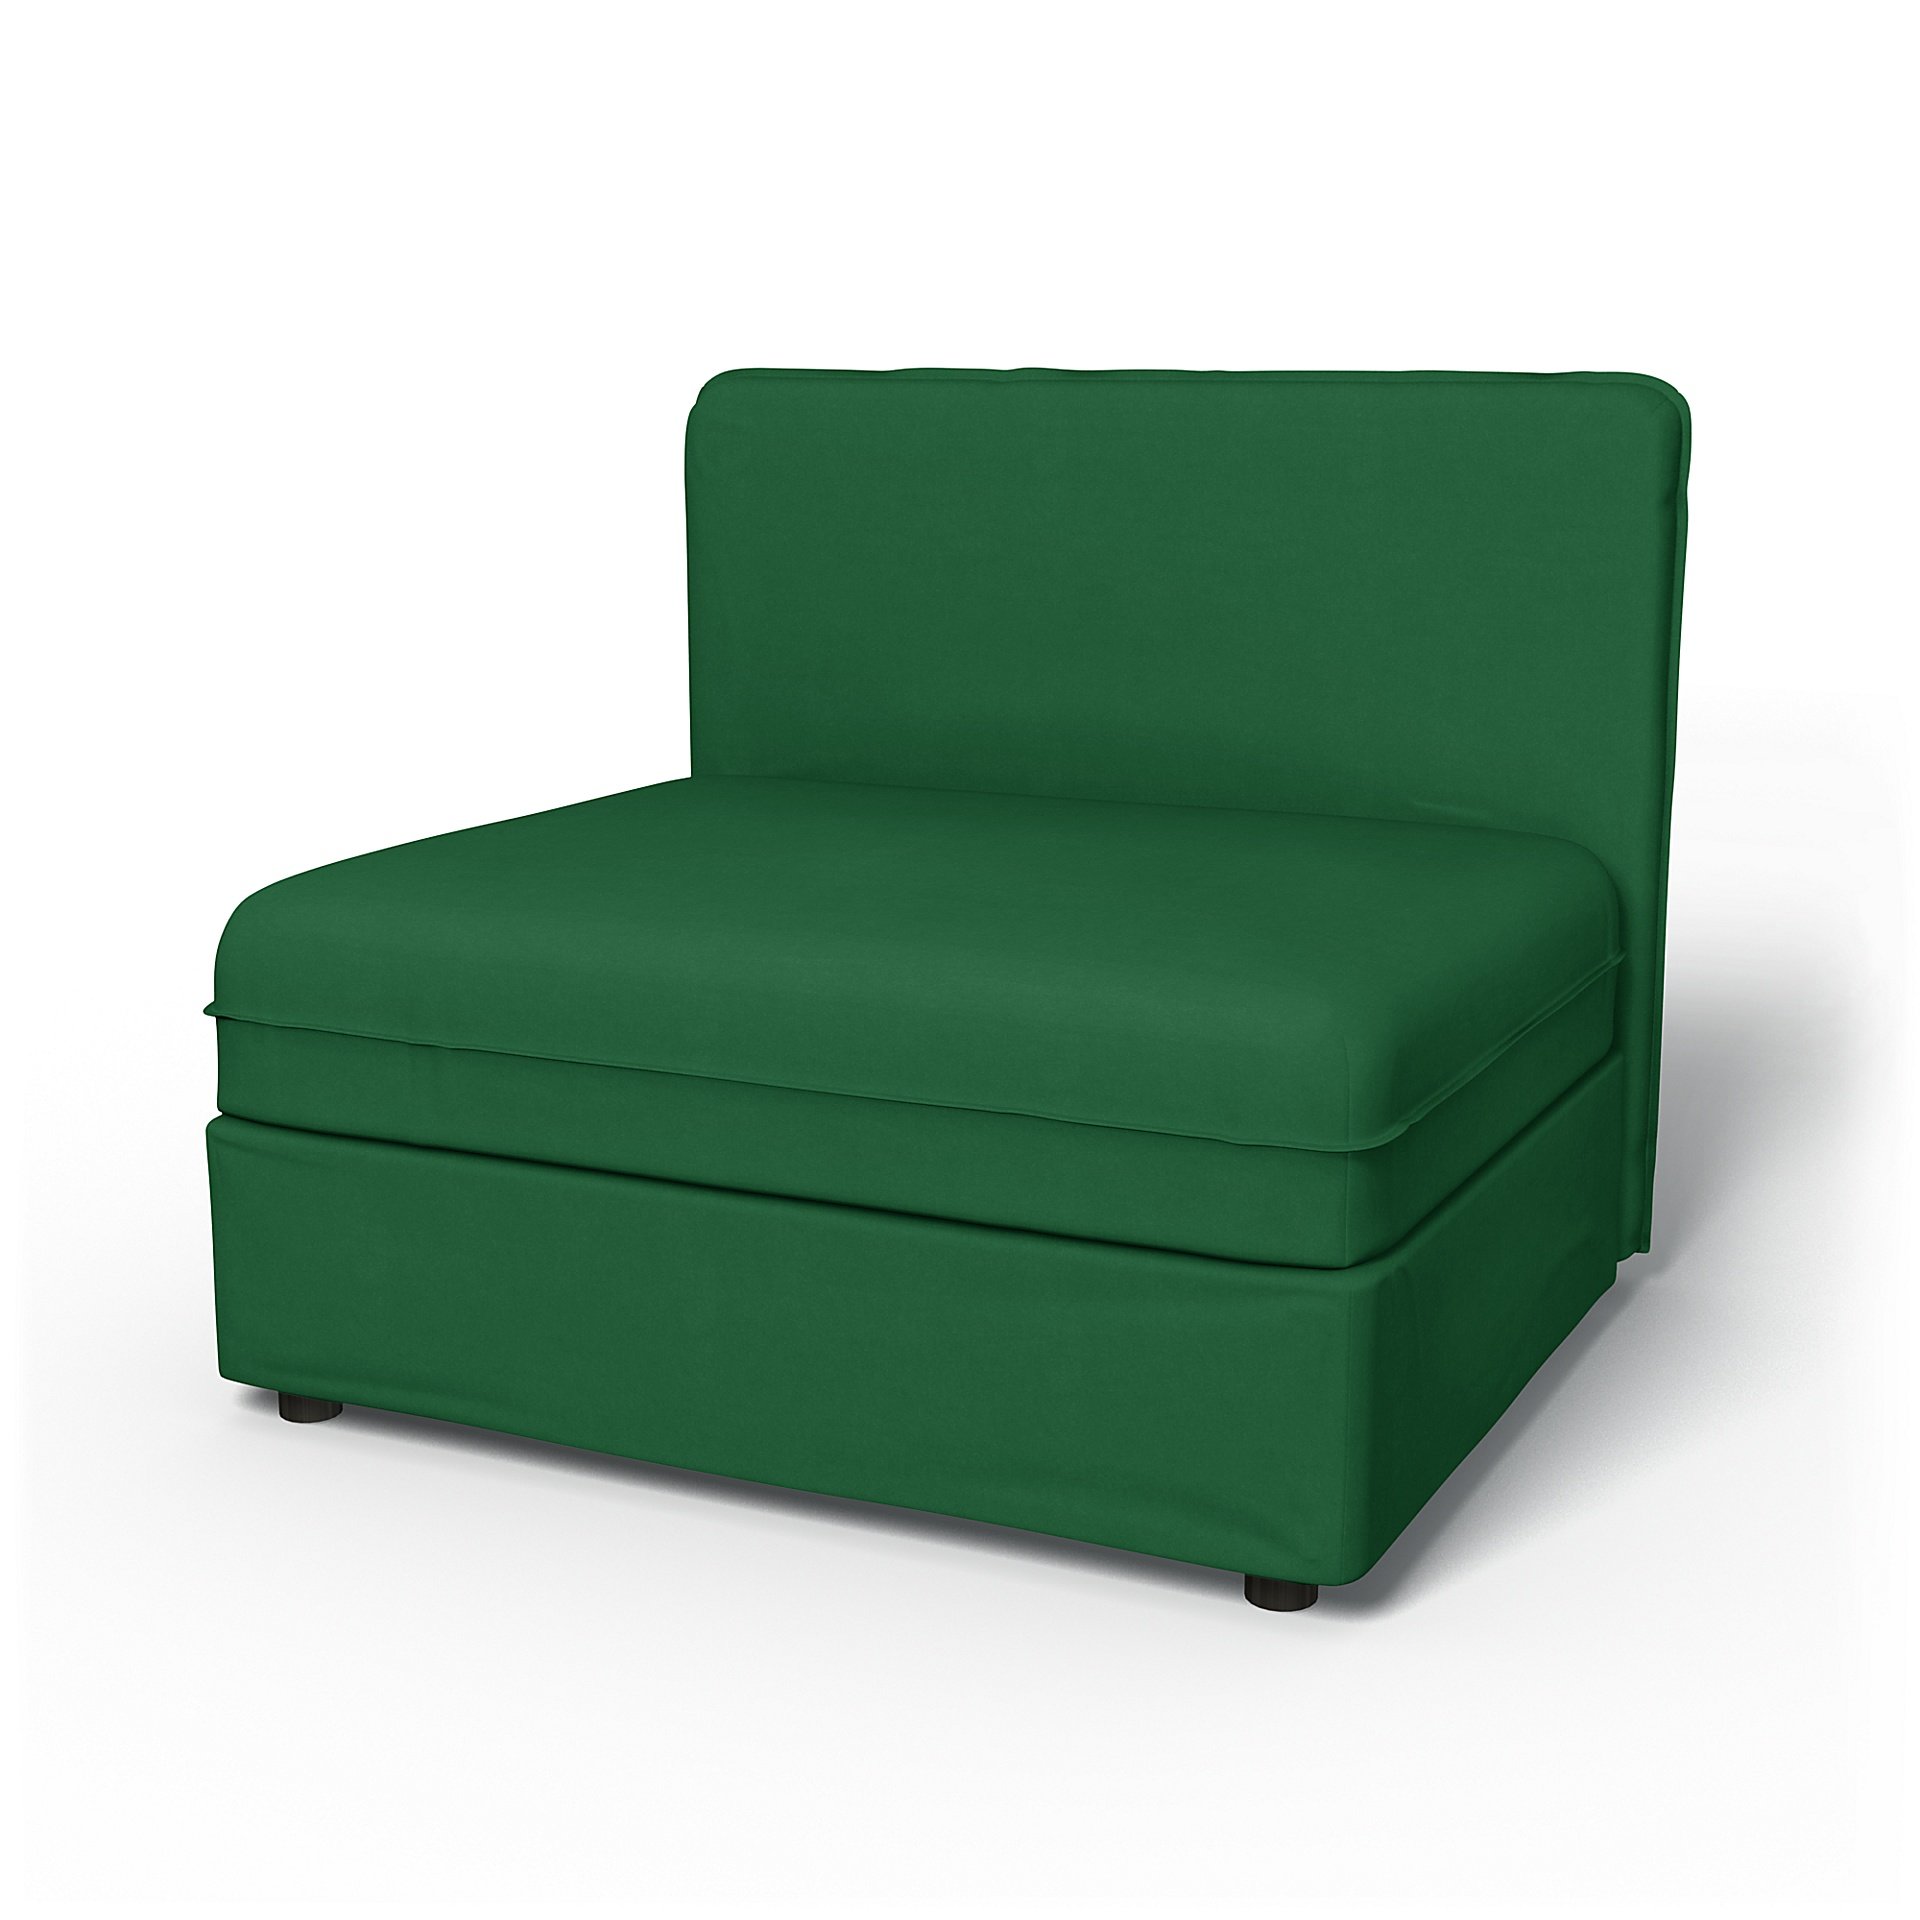 IKEA - Vallentuna Seat Module with Low Back Cover 100x80cm 39x32in, Abundant Green, Velvet - Bemz